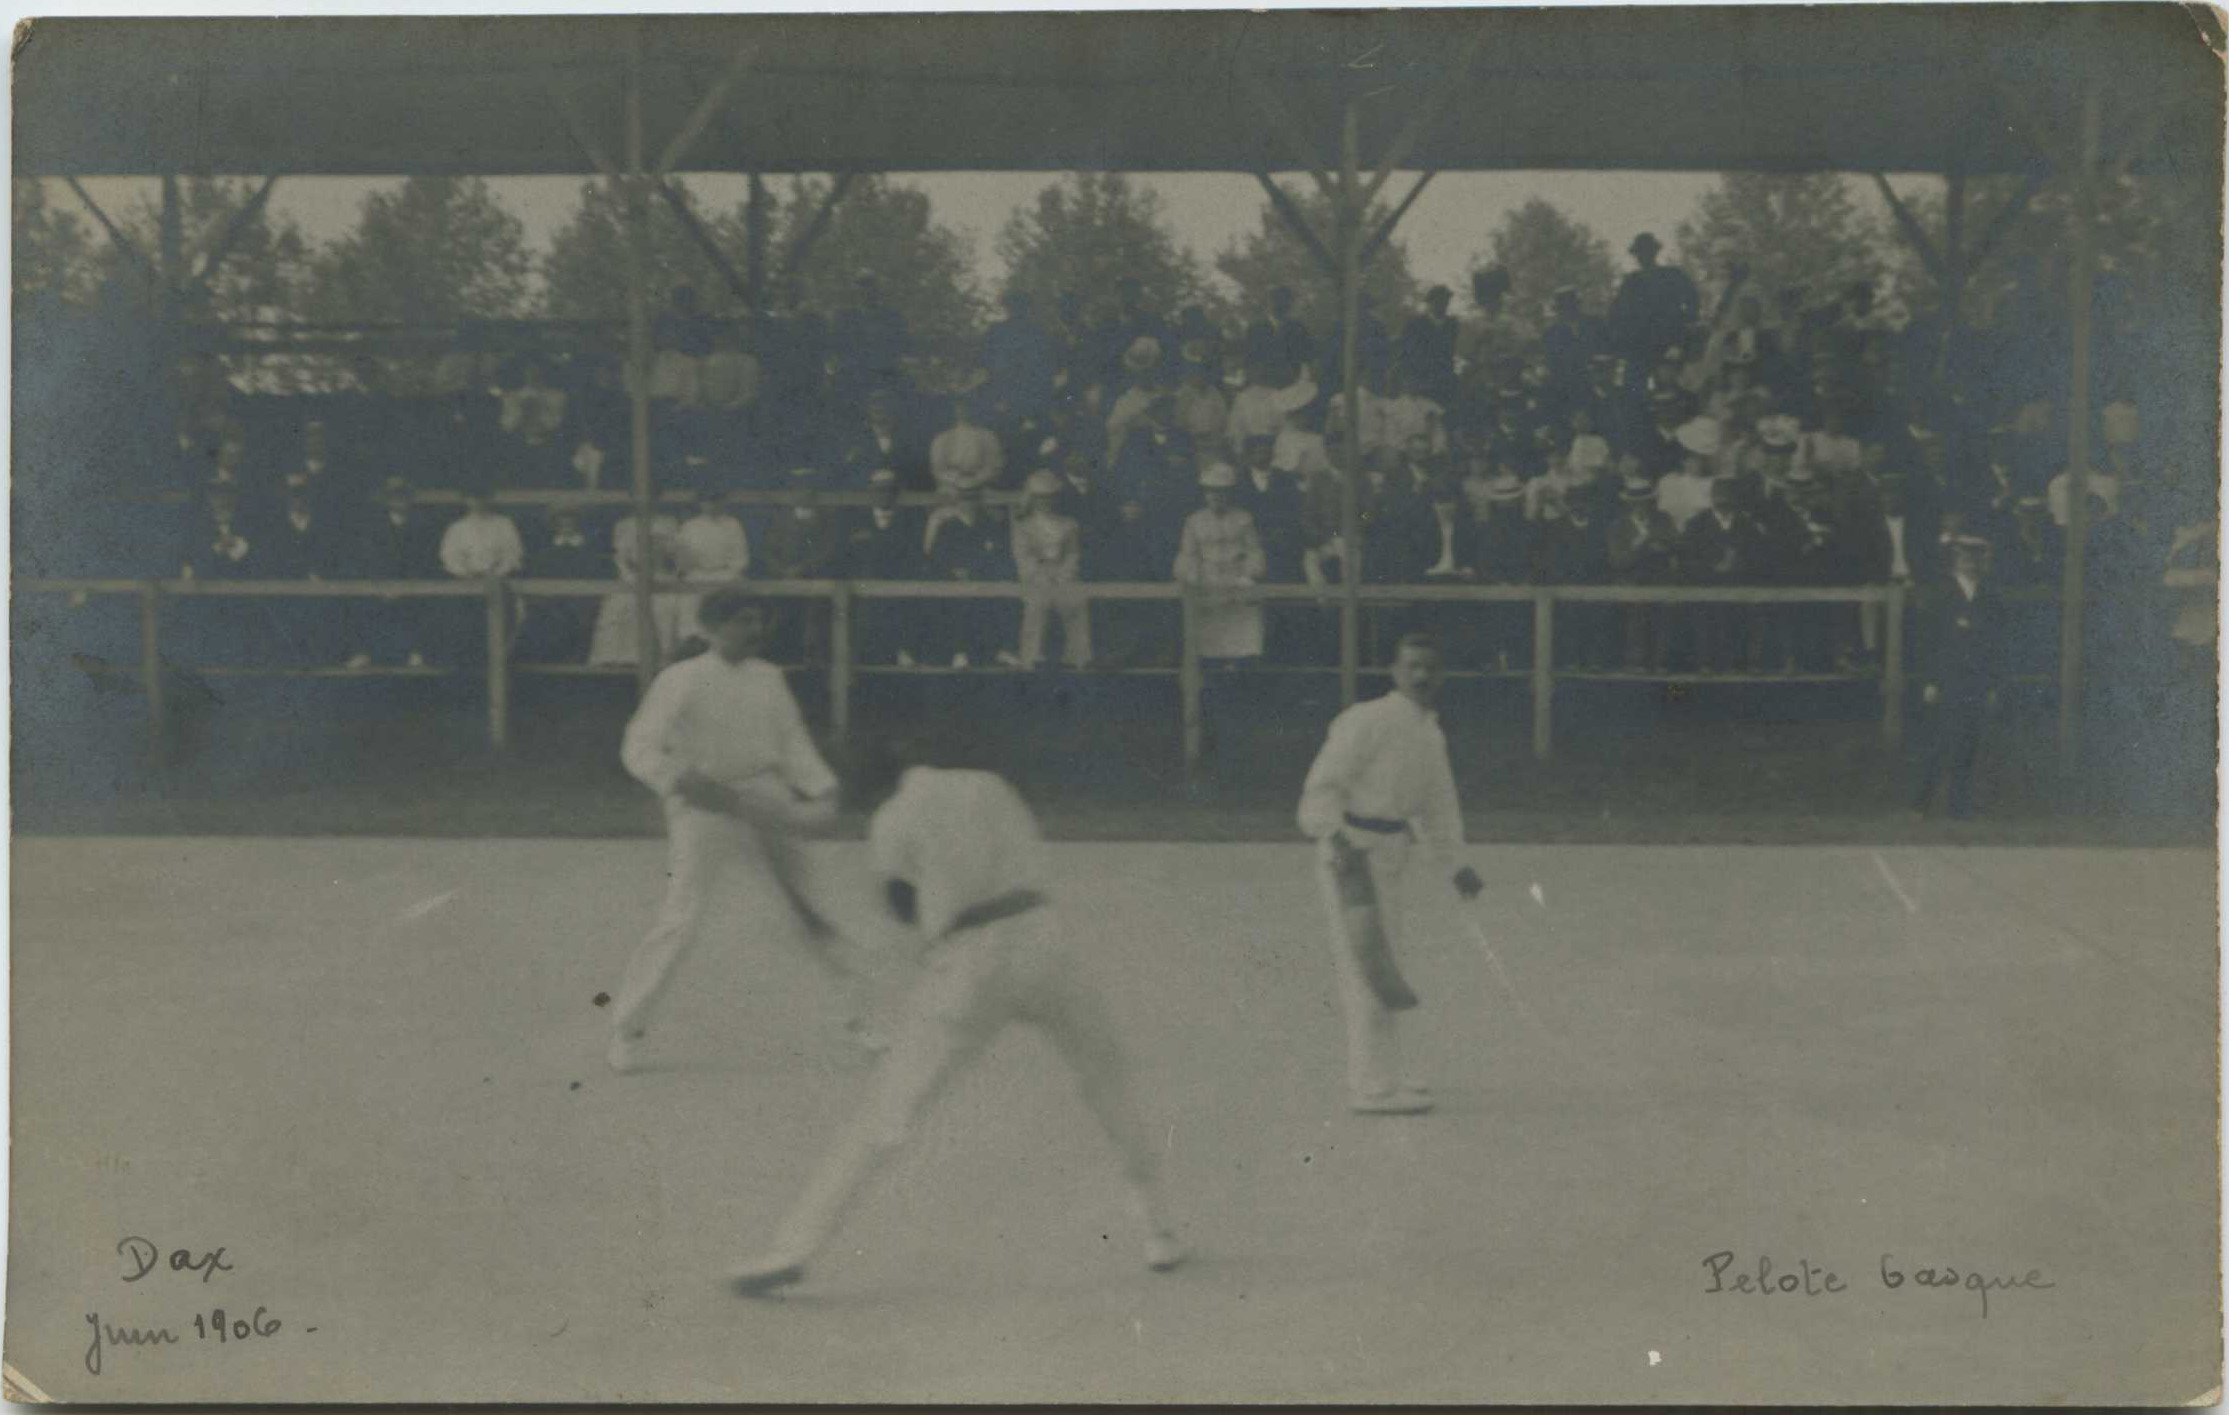 Dax - Carte photo - Partie de pelote basque (juin 1906)